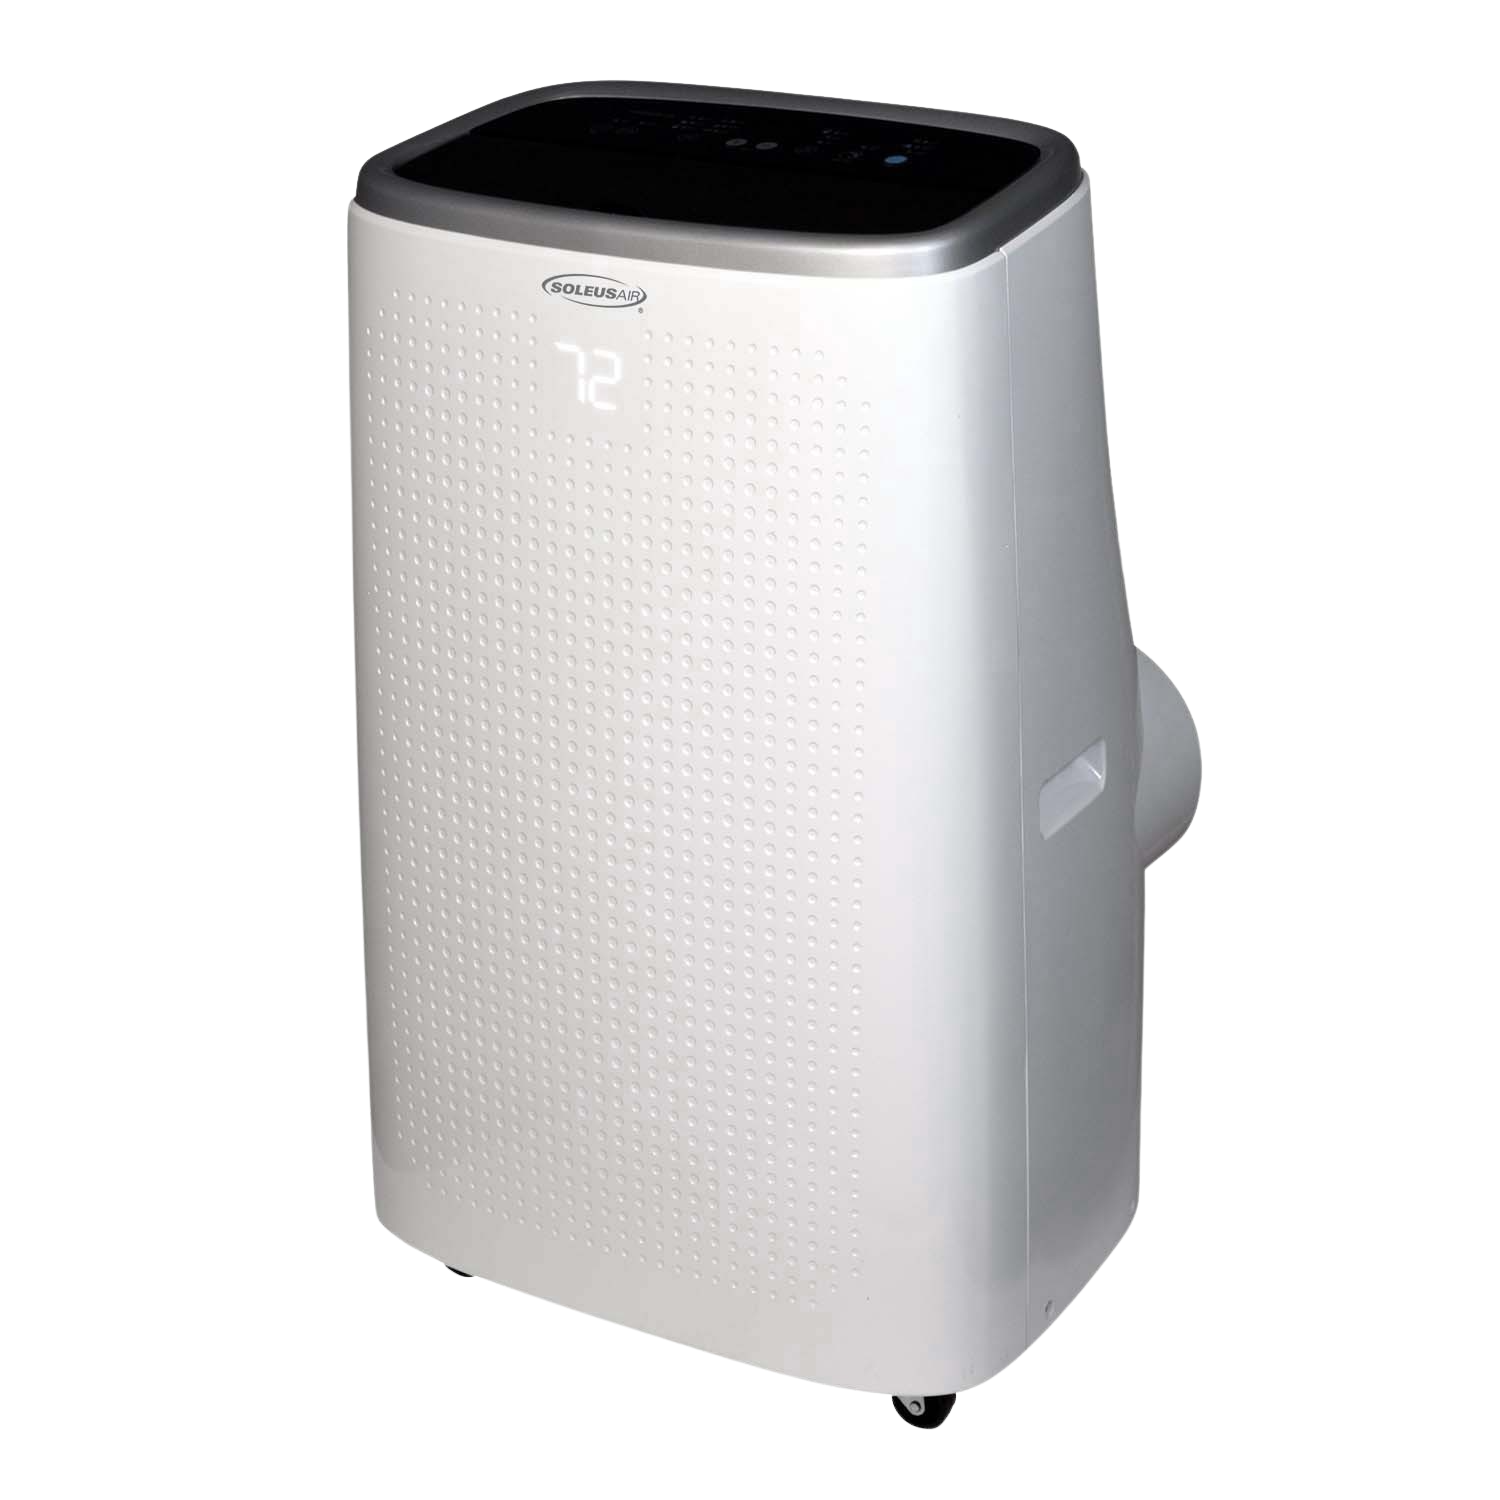 Soleus Air, Soleus Air PSH-08HP-01 8,000 BTU 115V Portable Air Conditioner with Heat Pump New